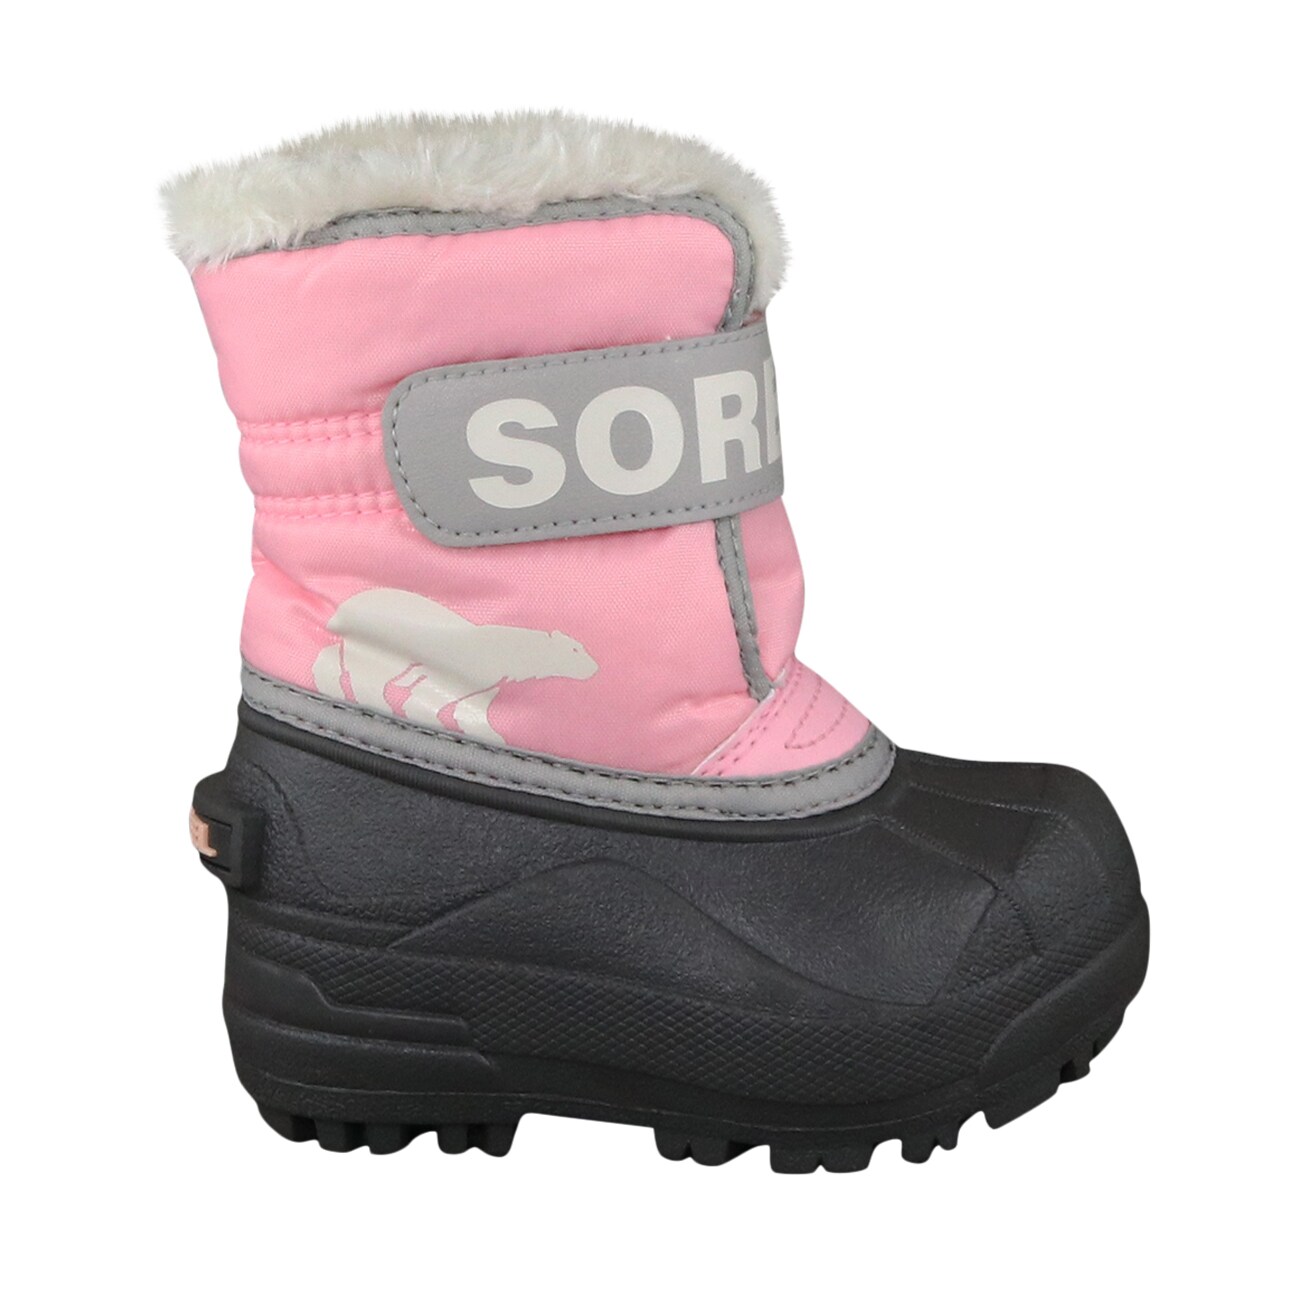 sorel childrens boots canada